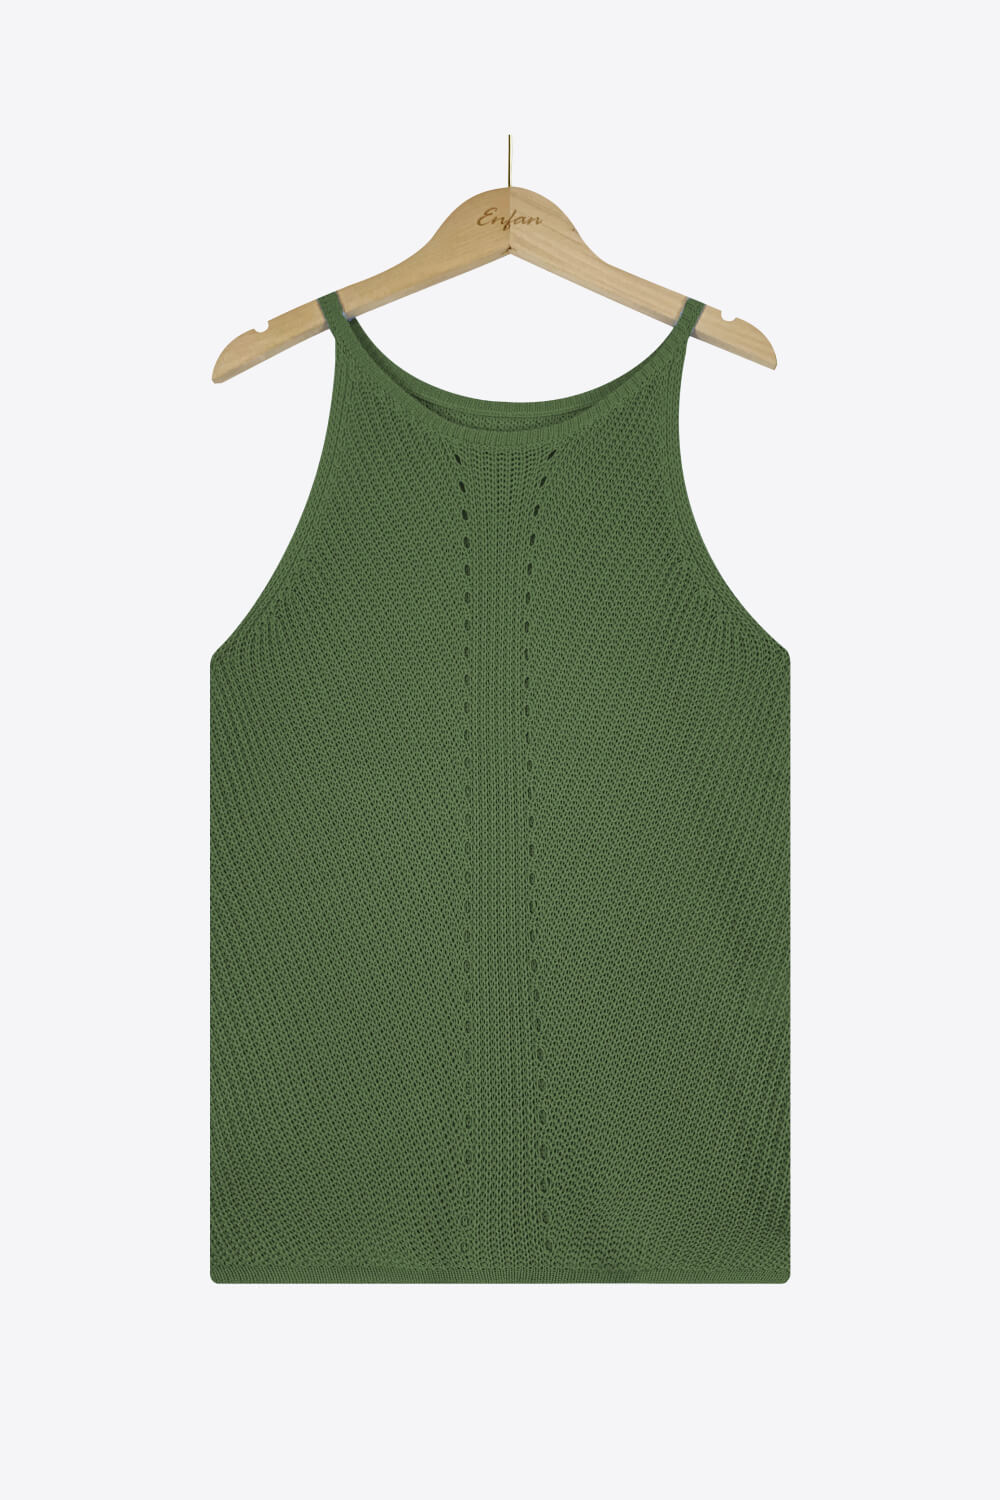 Openwork Grecian Neck Knit Tank Top - Fashion Girl Online Store